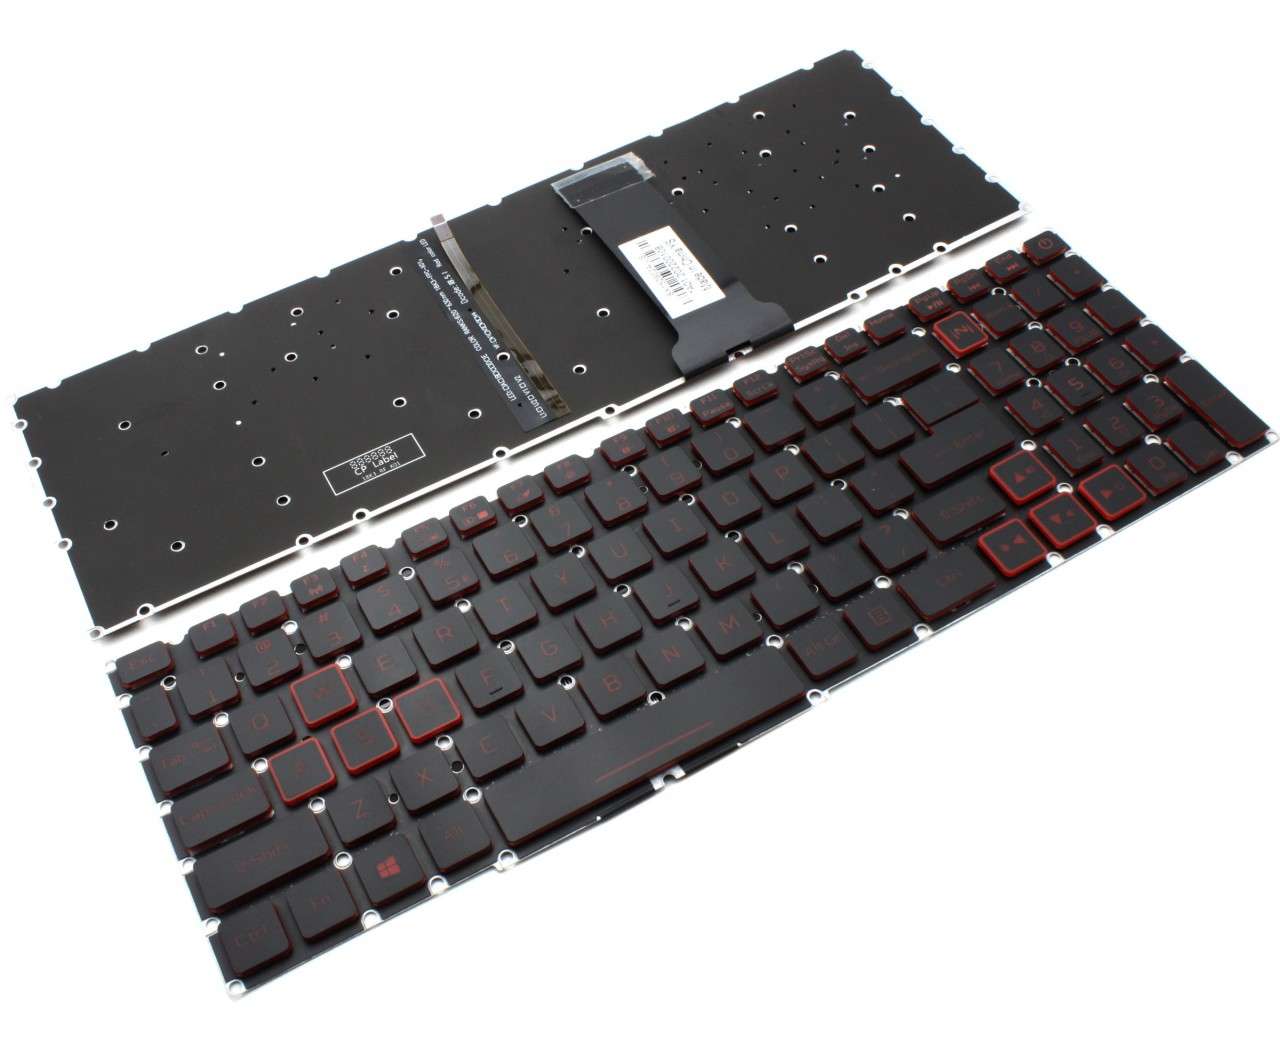 Tastatura Acer Nitro 5 AN517-51 iluminata backlit